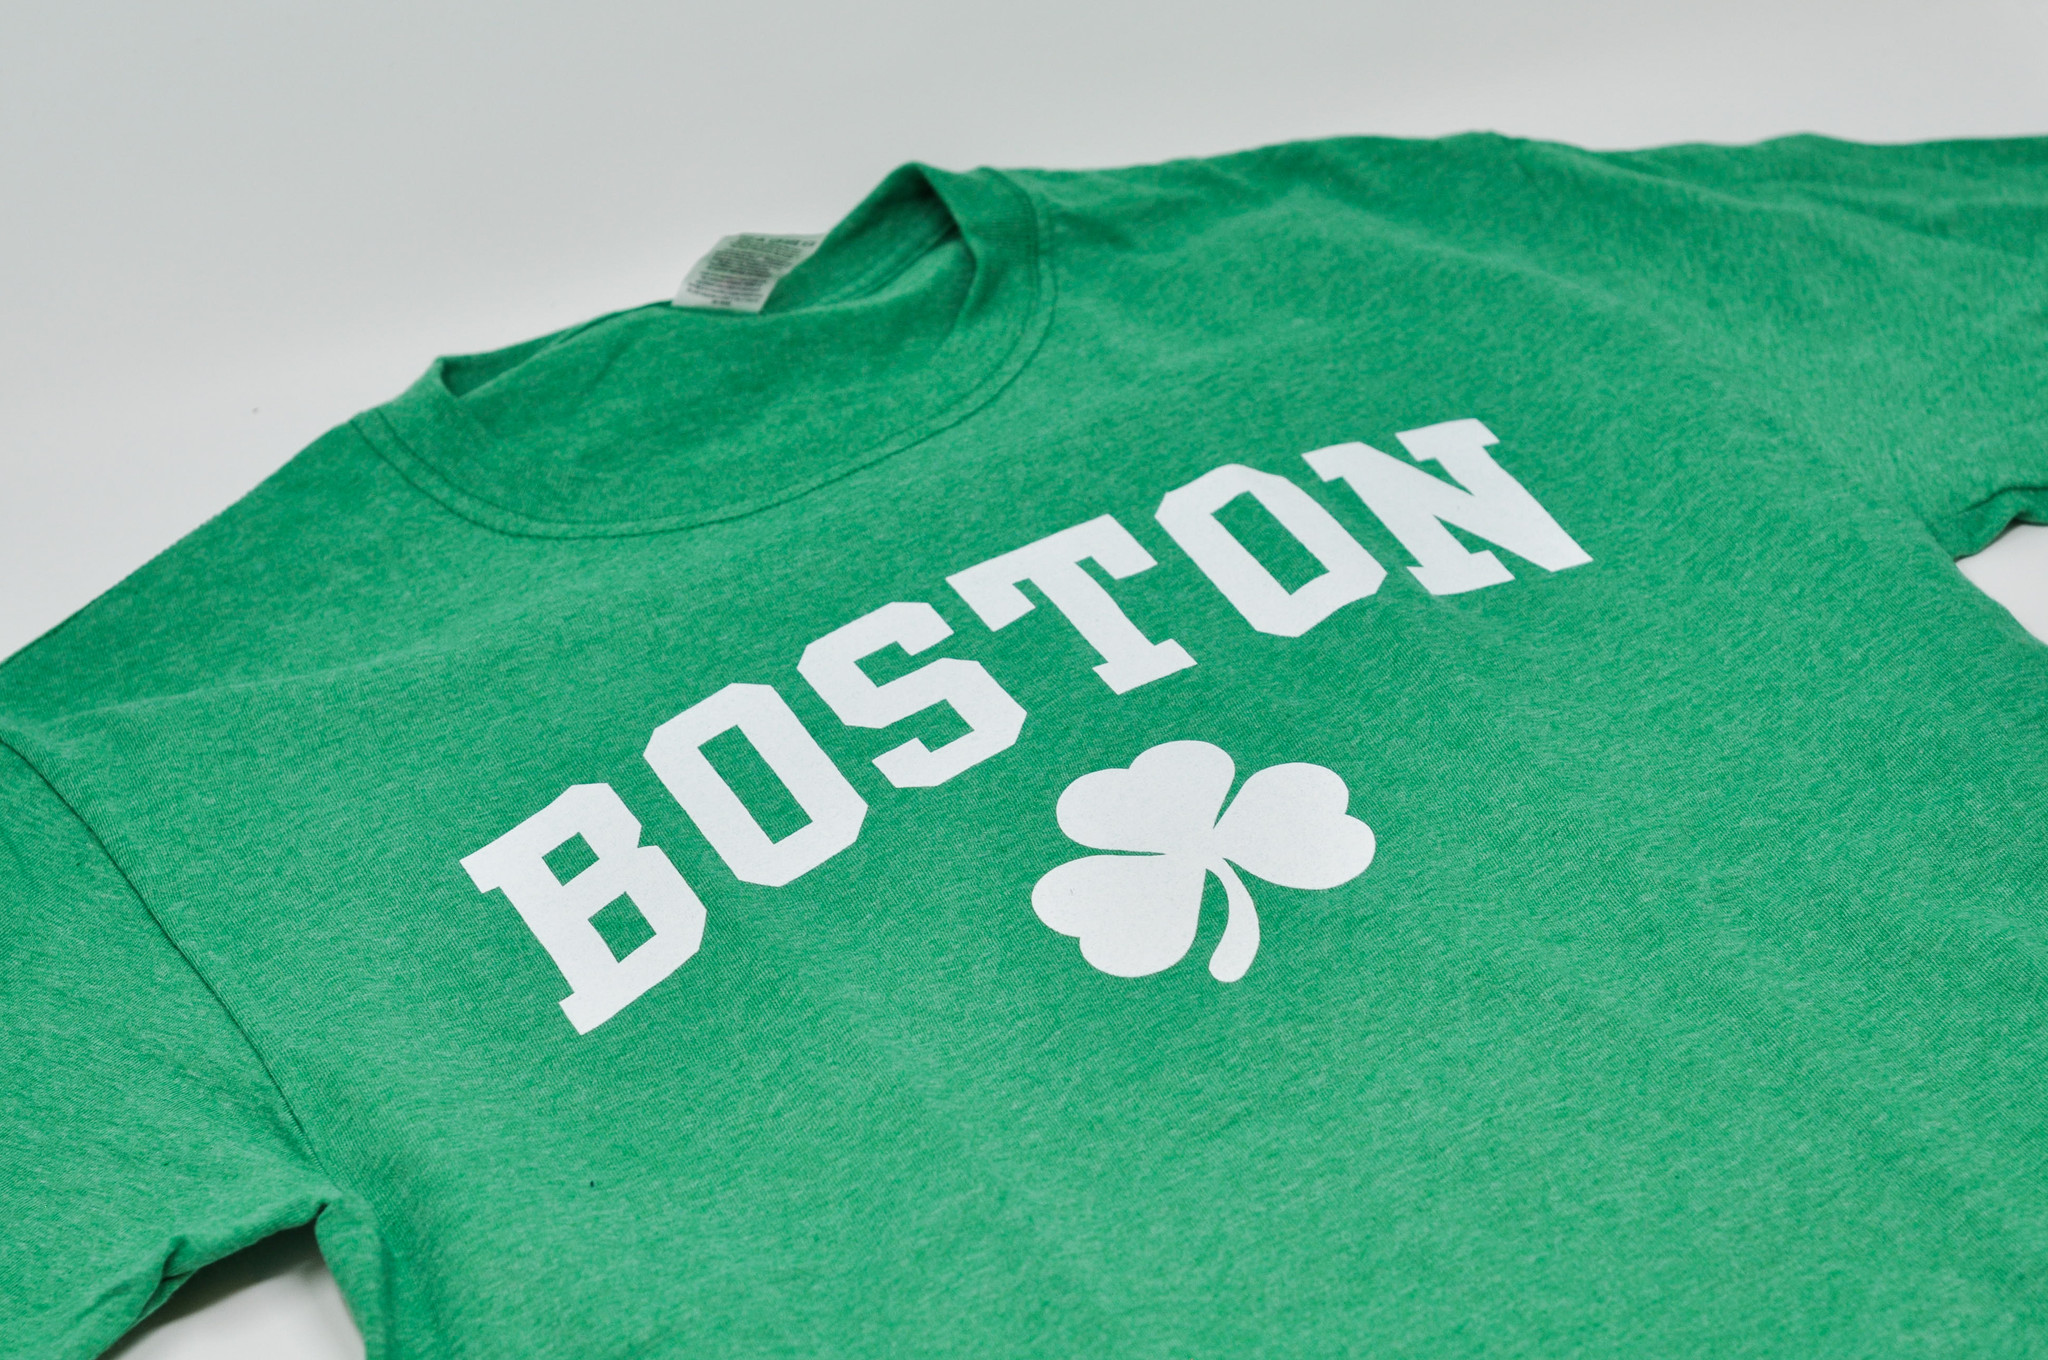 Believe in Boston - Basketball Shamrock - T-Shirt – Sully's Brand